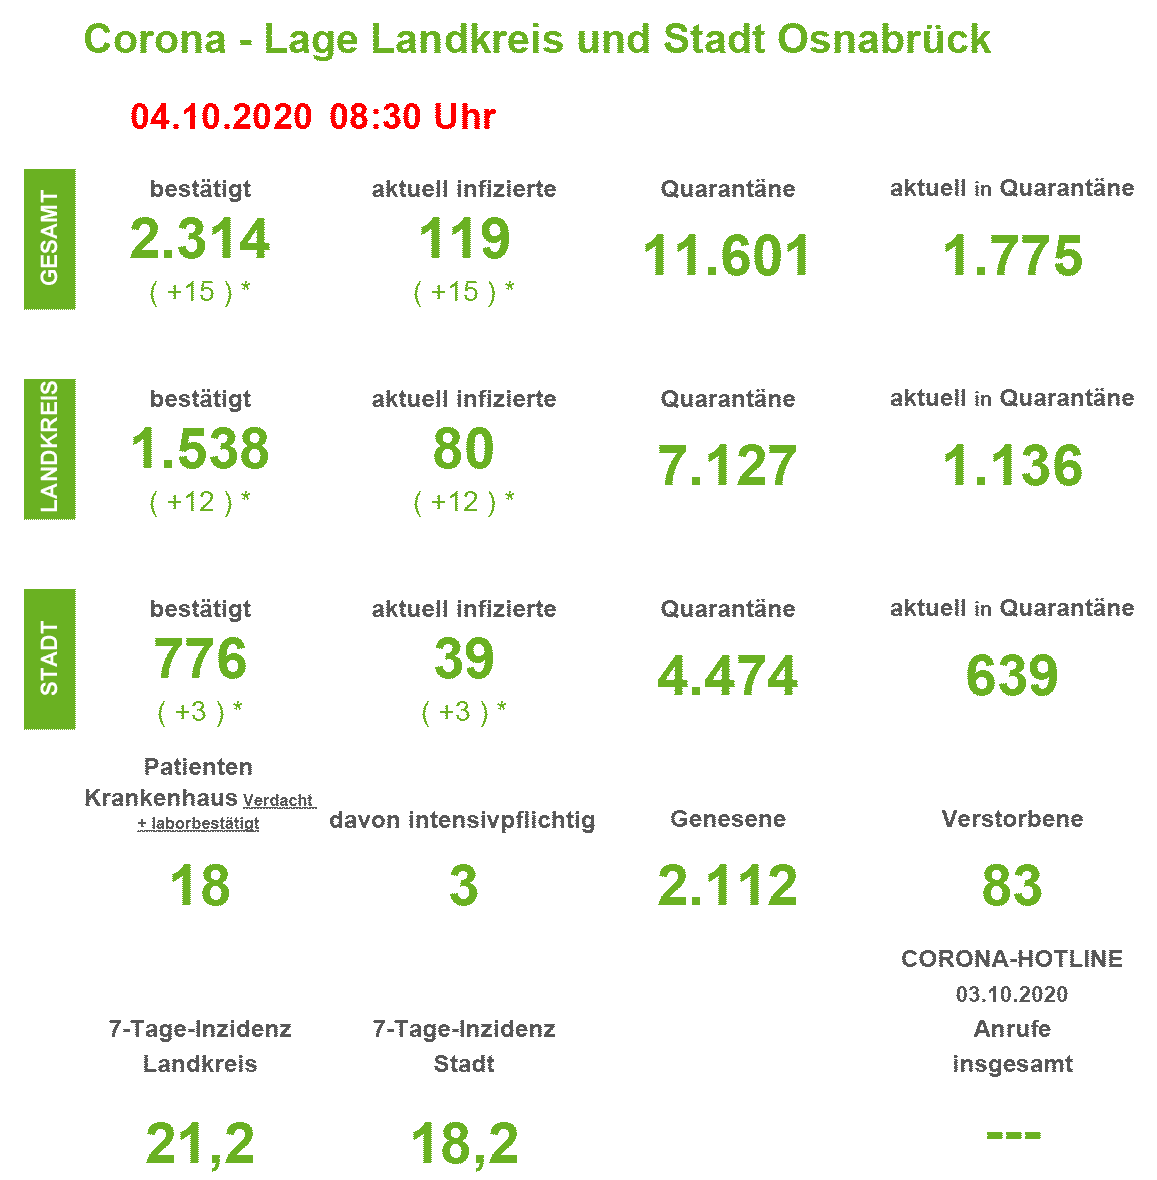 Corona-Infektionszahlen in der Region Osnabrück, Stand 4. Oktober 2020. / Quelle: Landkreis Osnabrück.